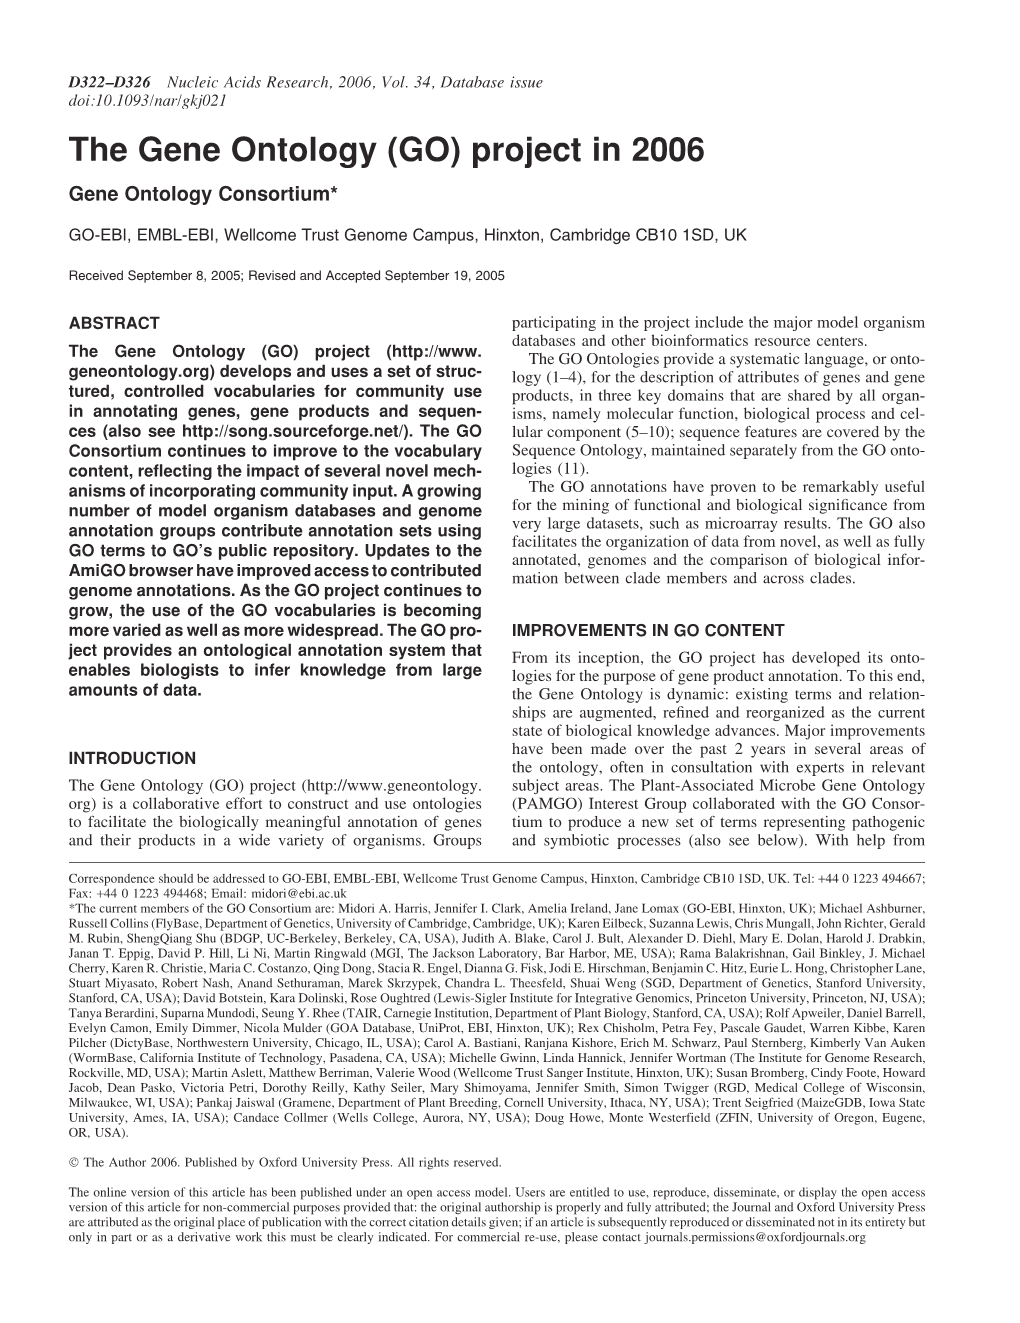 The Gene Ontology (GO) Project in 2006 Gene Ontology Consortium*